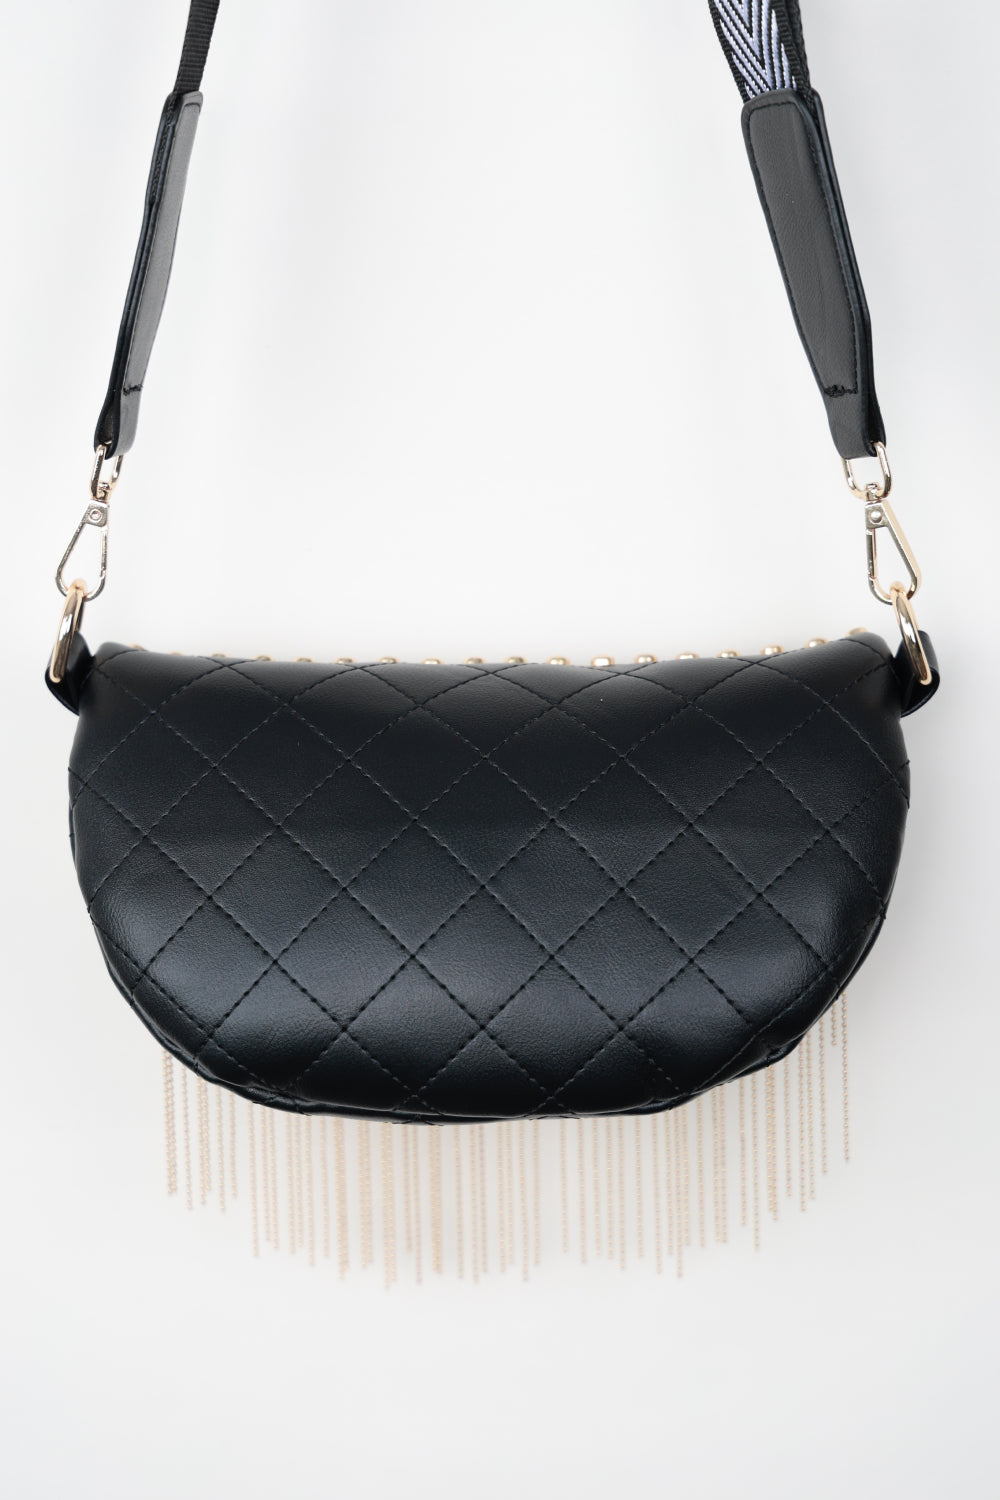 PU Leather Studded Sling Bag with Fringes - nailedmoms